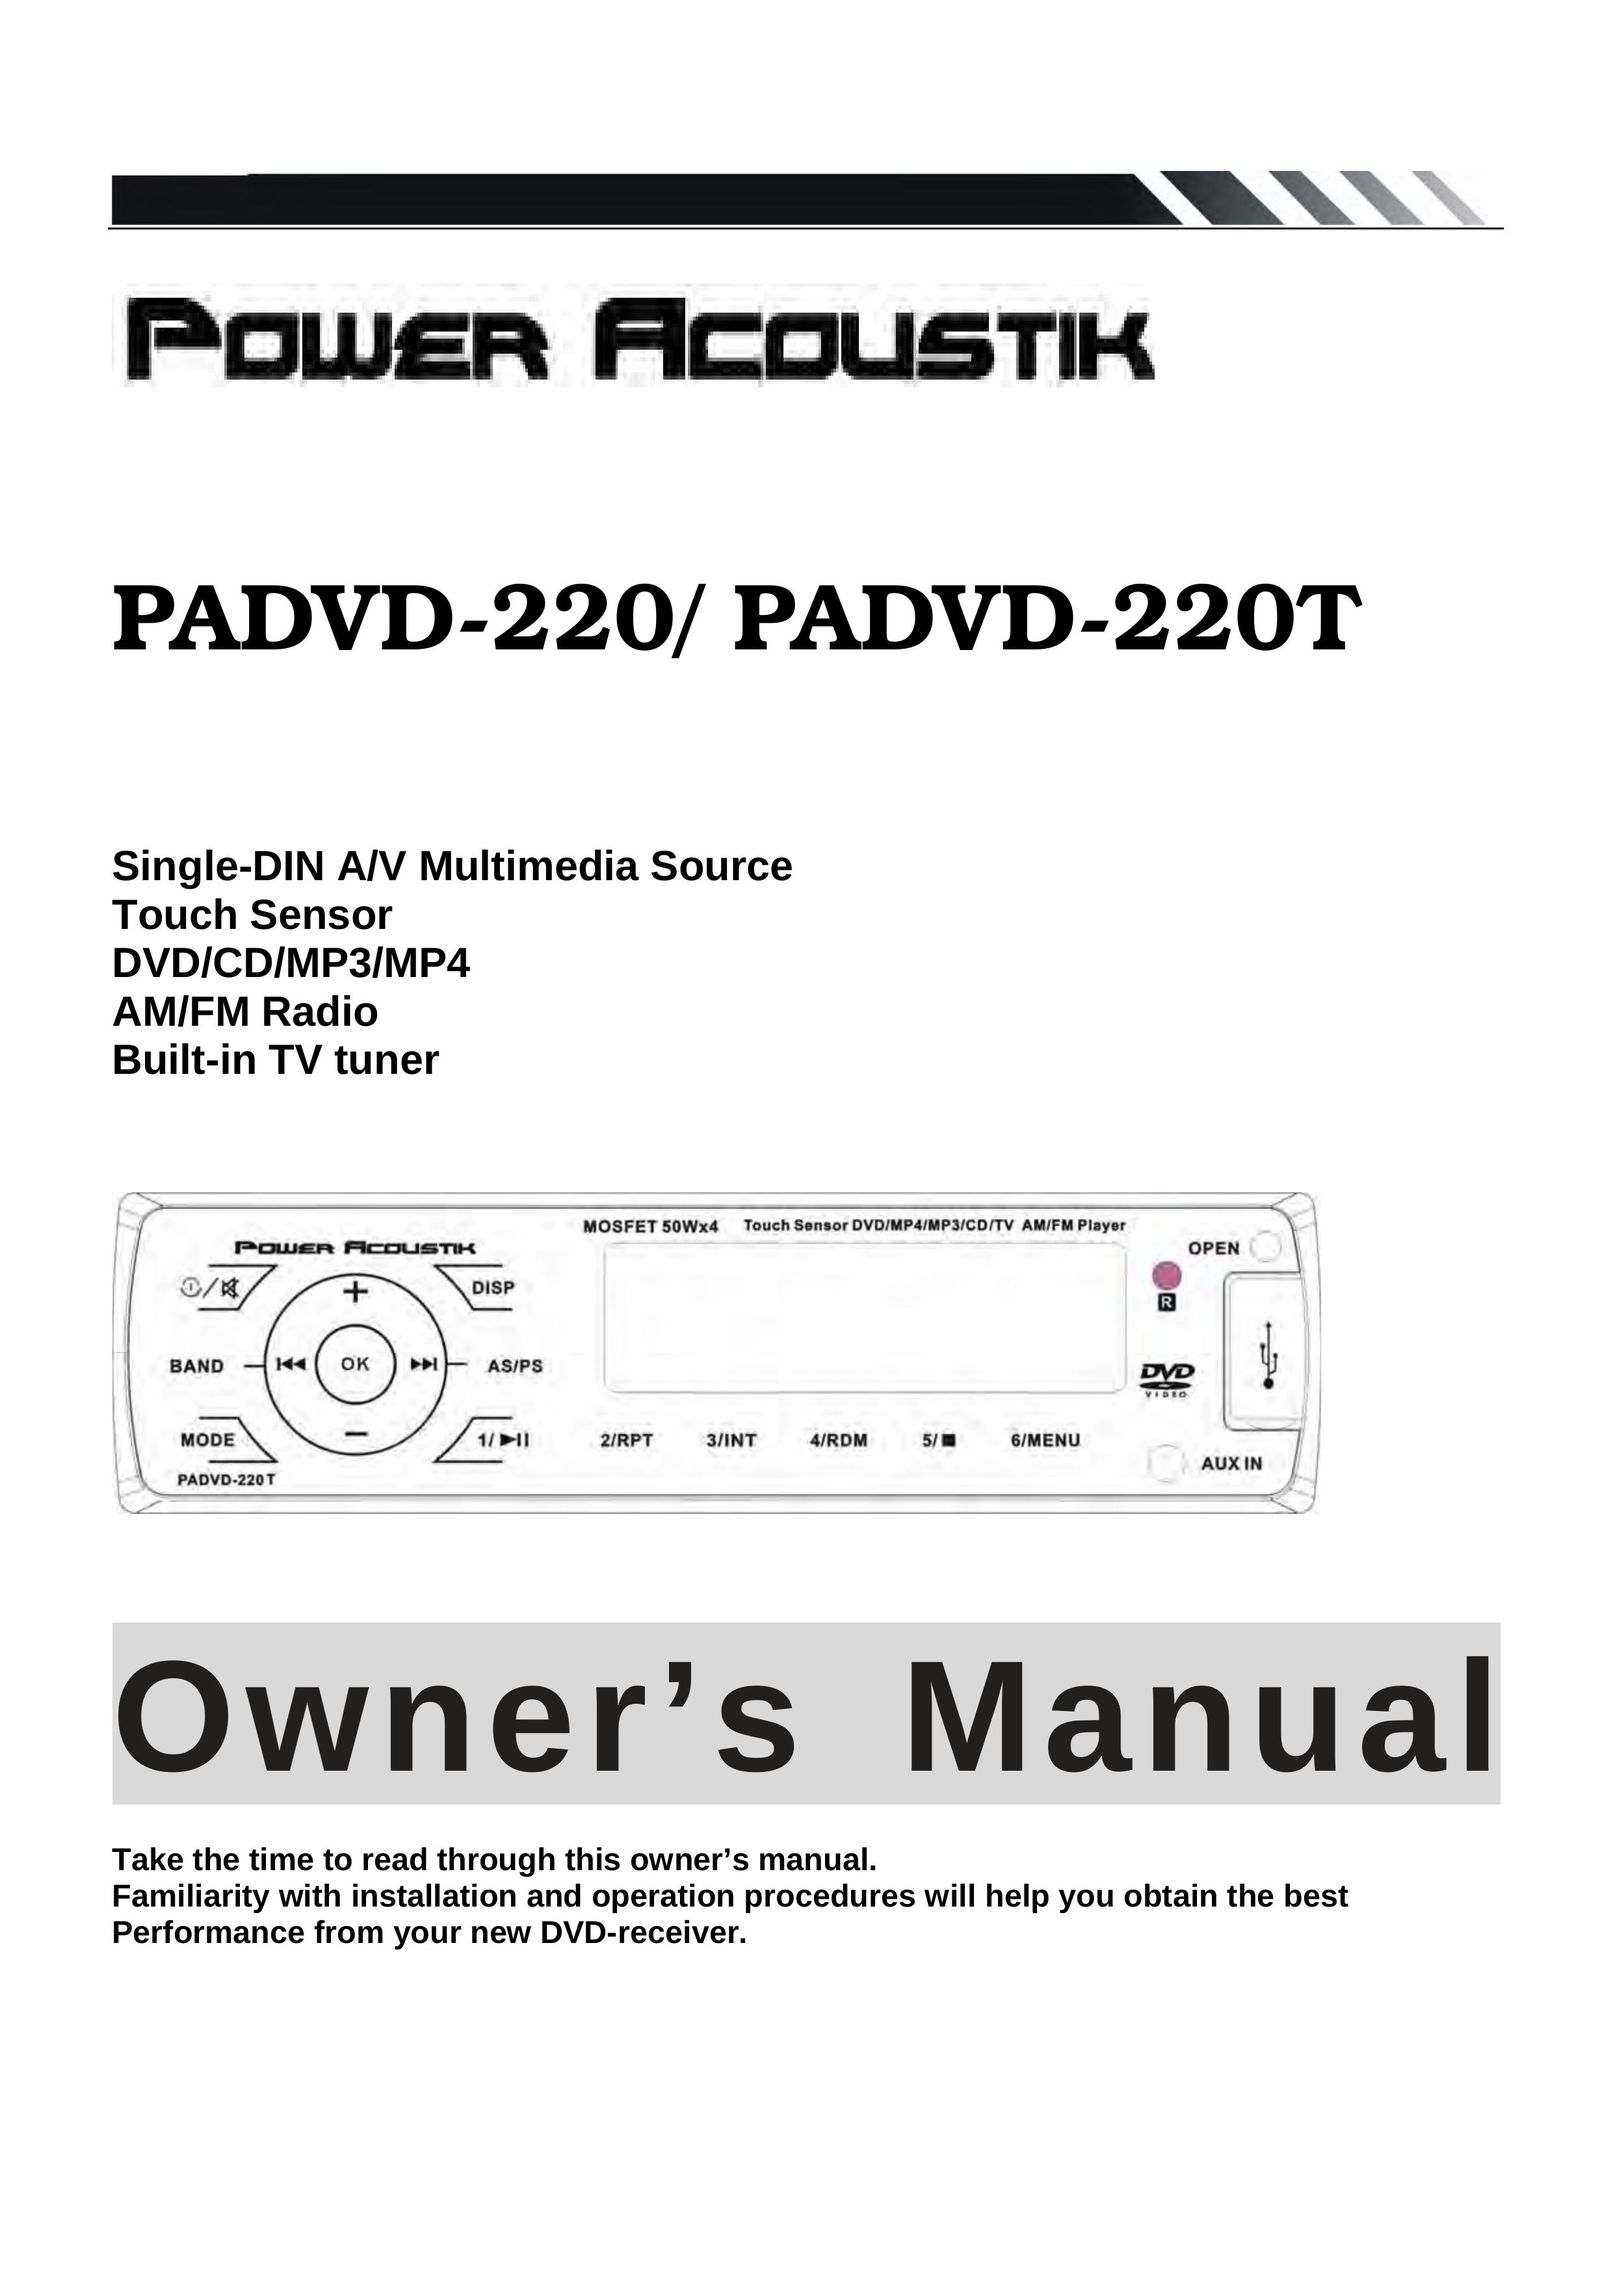 Power Acoustik PADVD-220T Car Video System User Manual